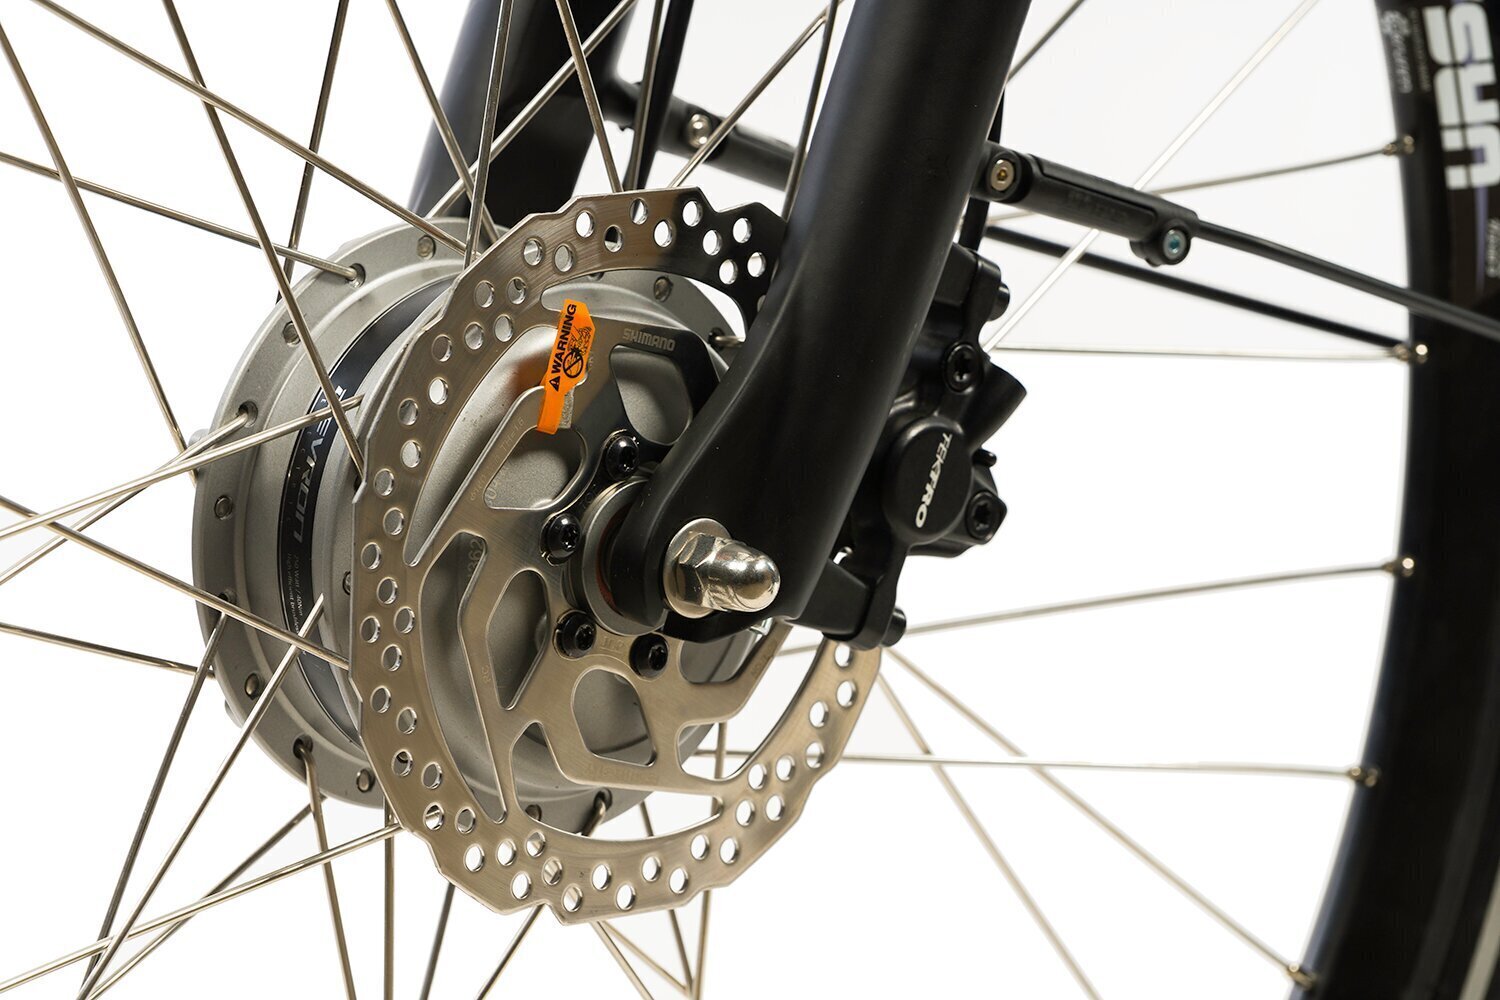 Elektriskais velosipēds Devron 28126 28", melns cena un informācija | Elektrovelosipēdi | 220.lv